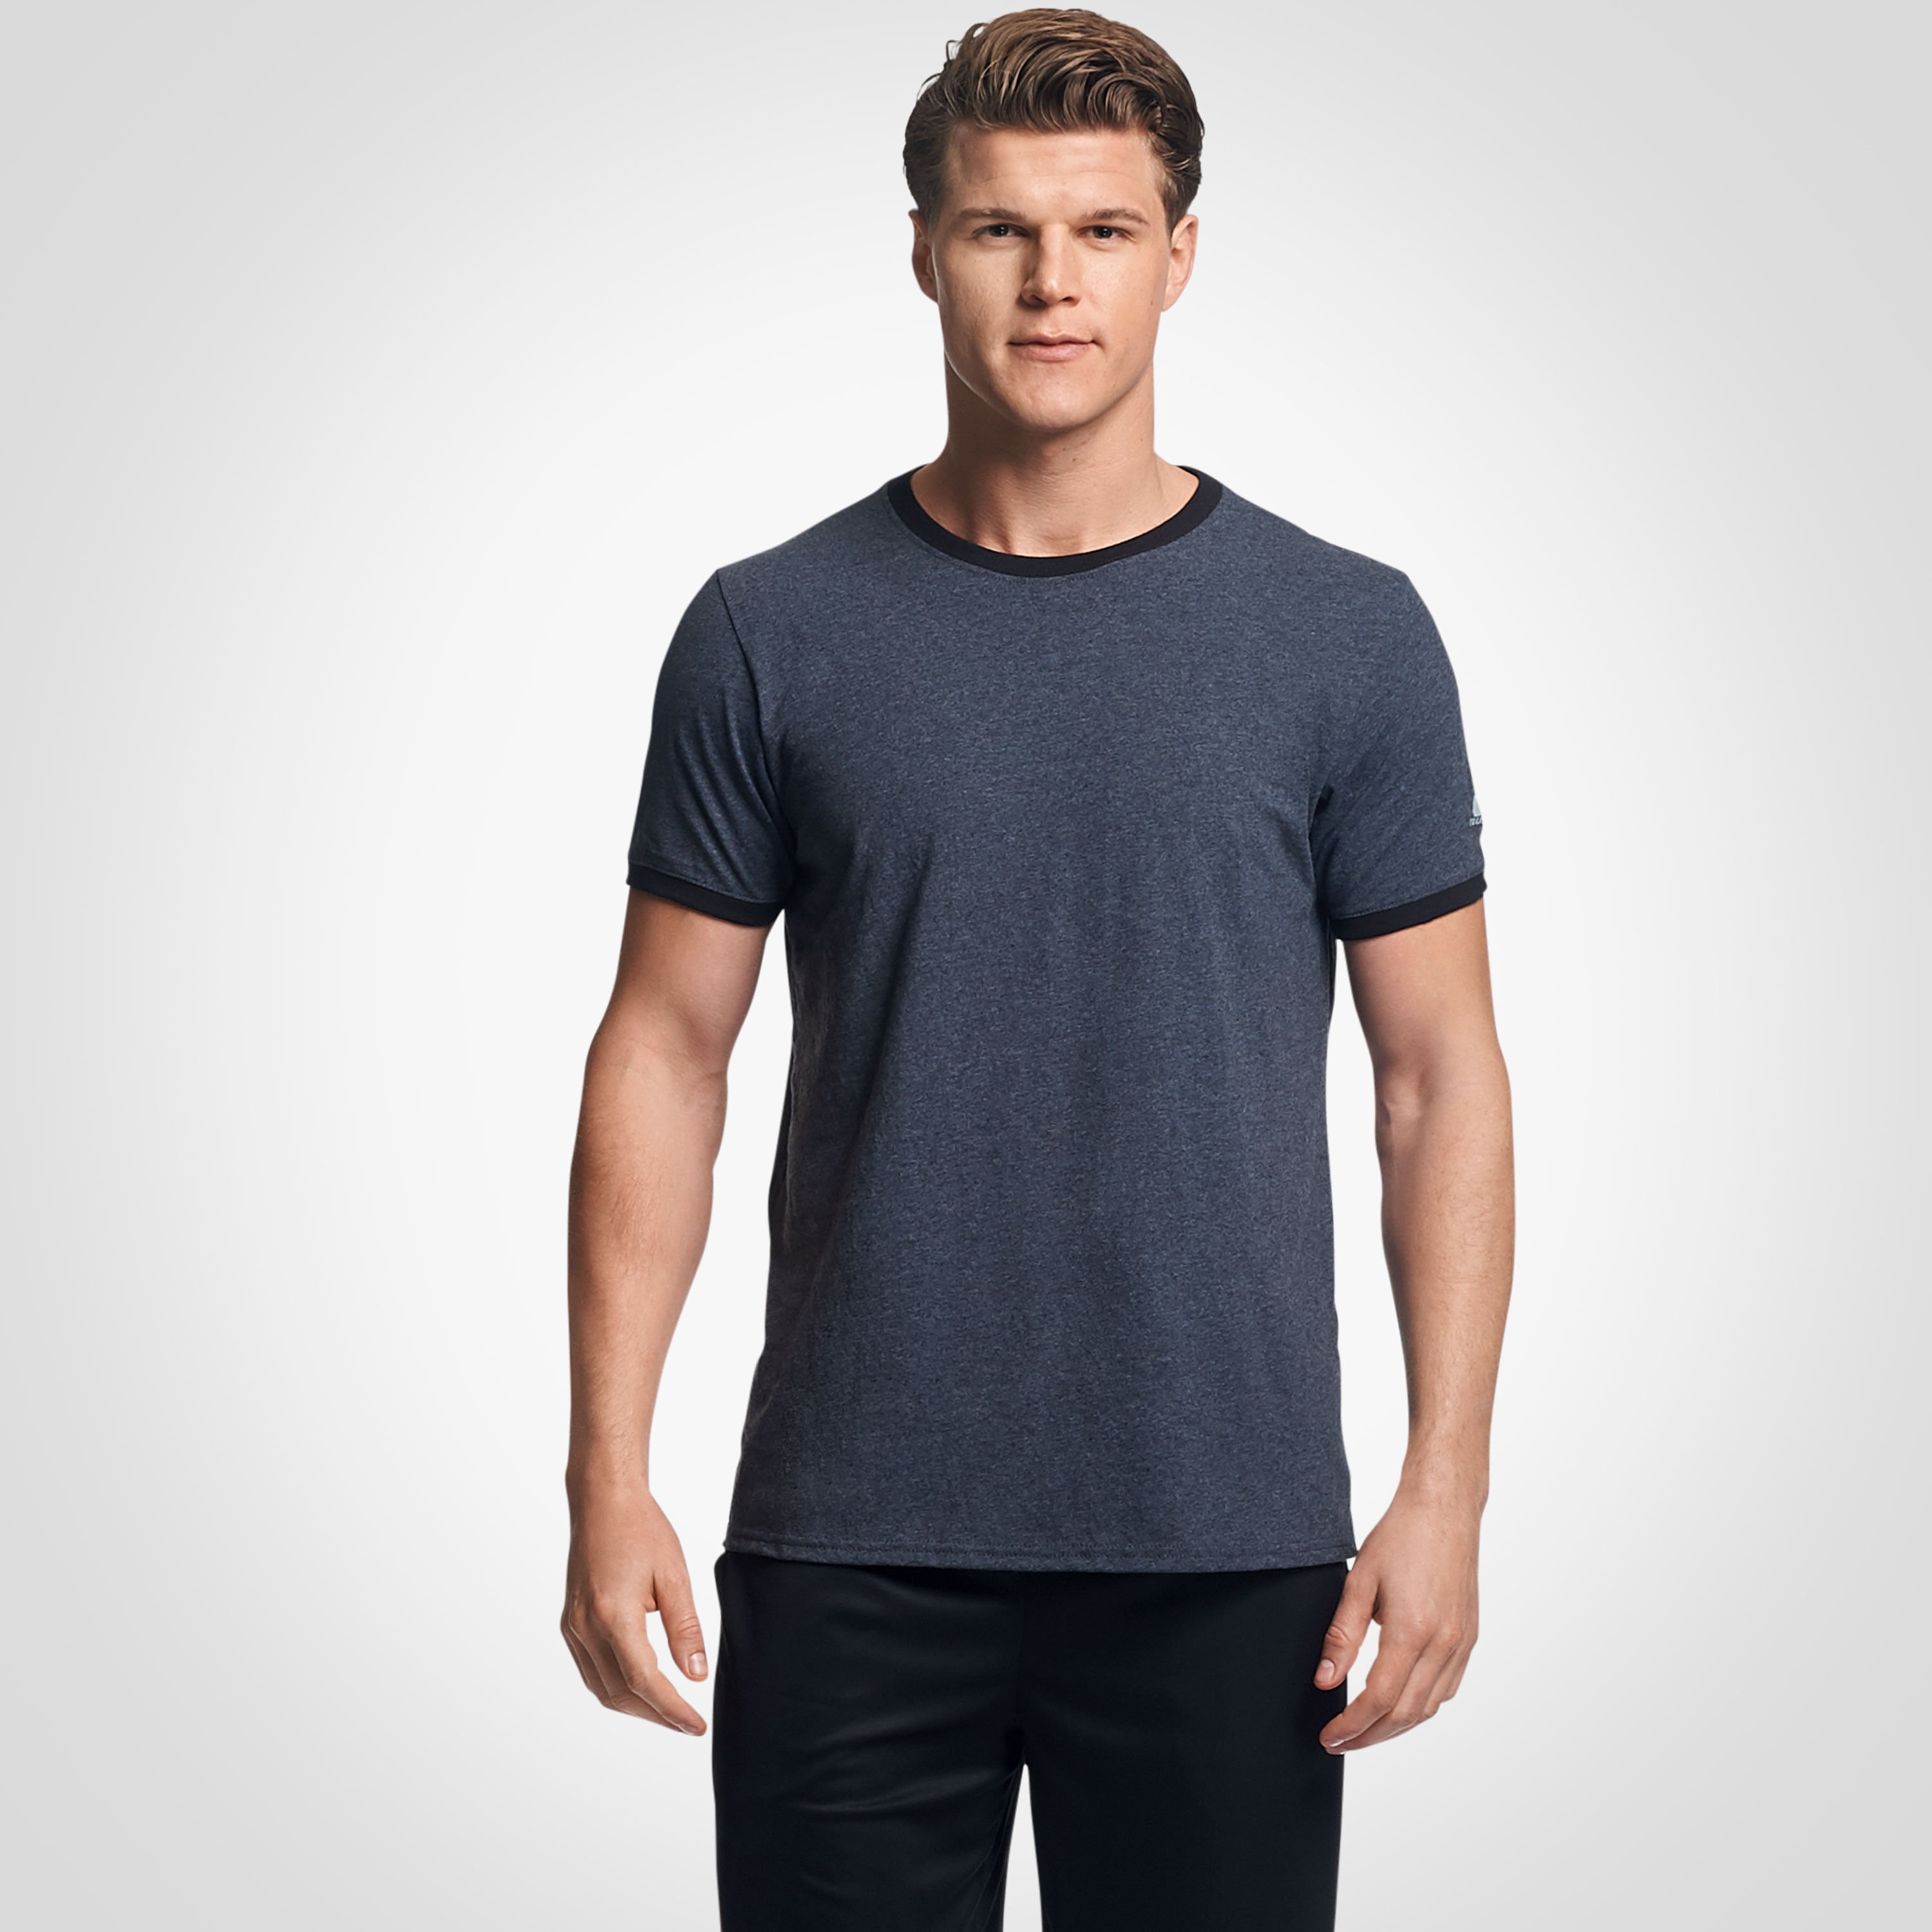 men's workout tee shirts